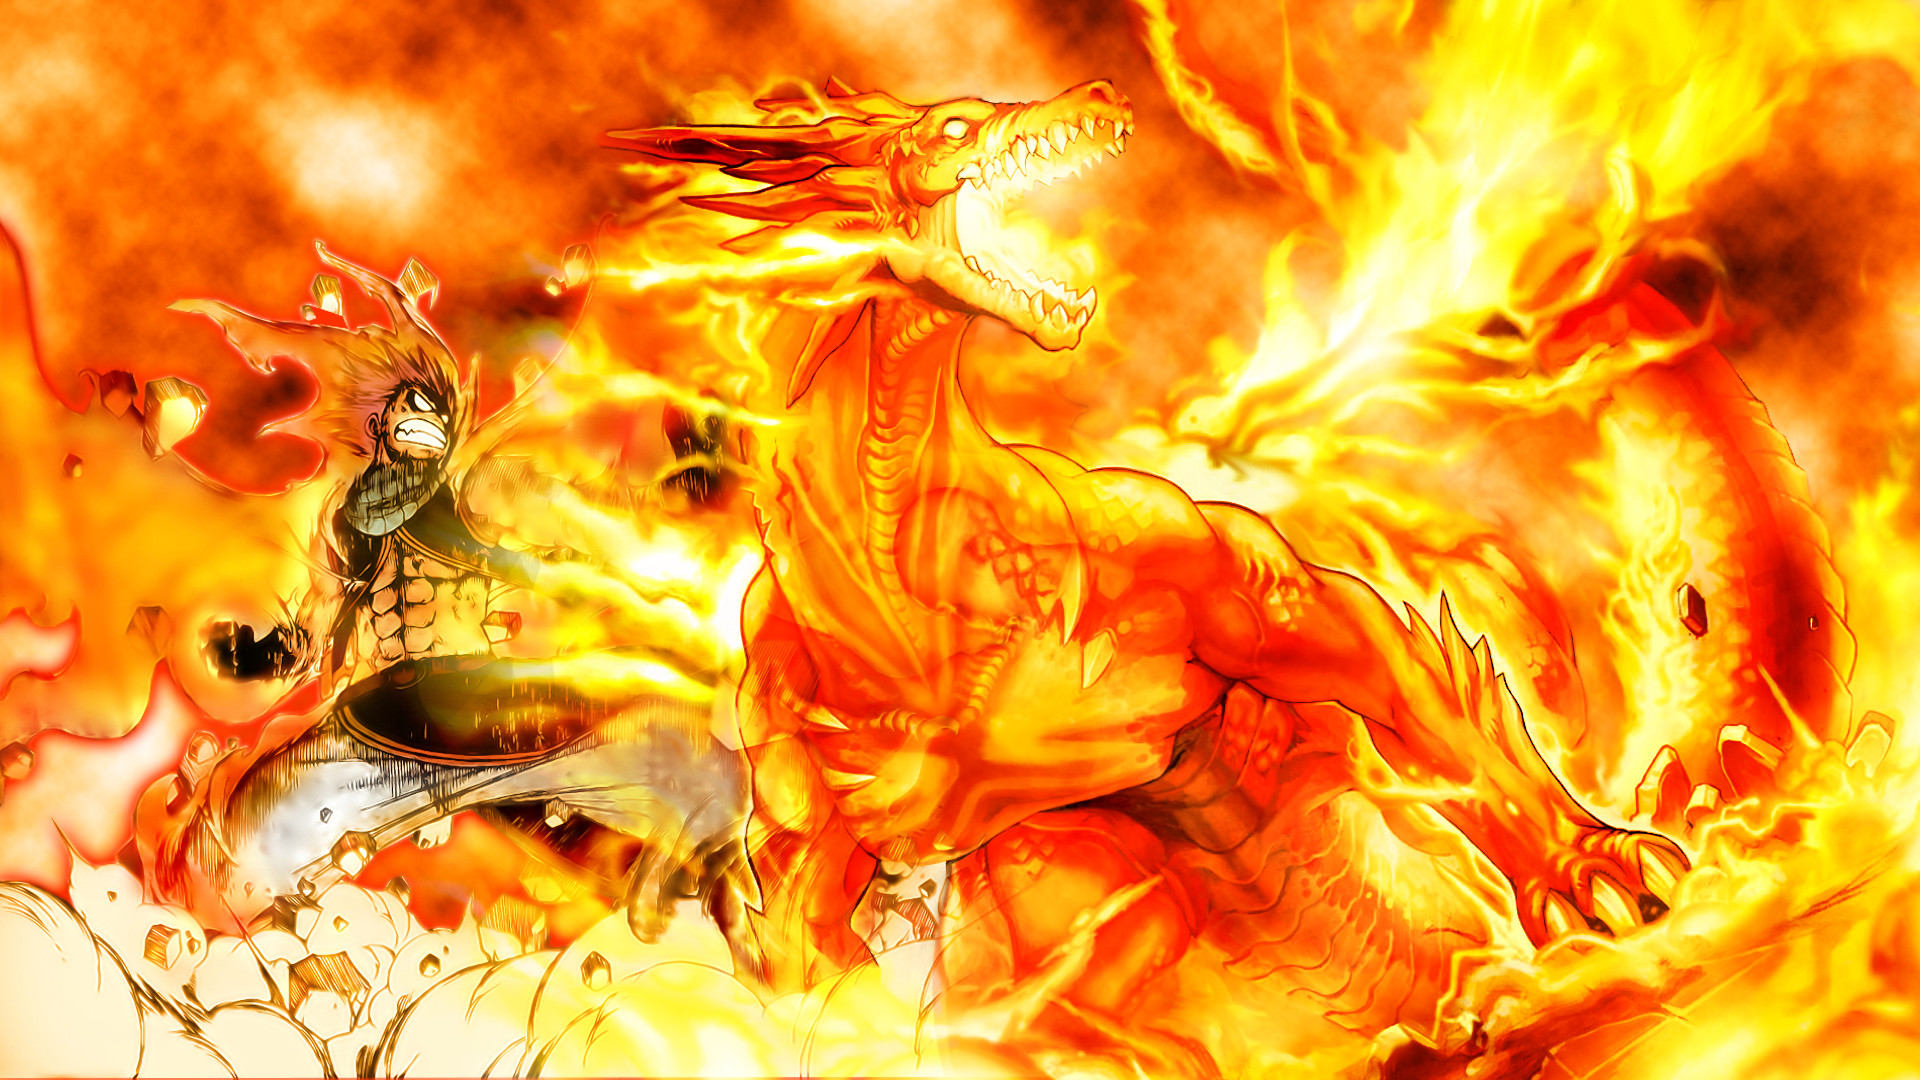 fairy tail natsu wallpaper,flame,fire,heat,cg artwork,fictional character